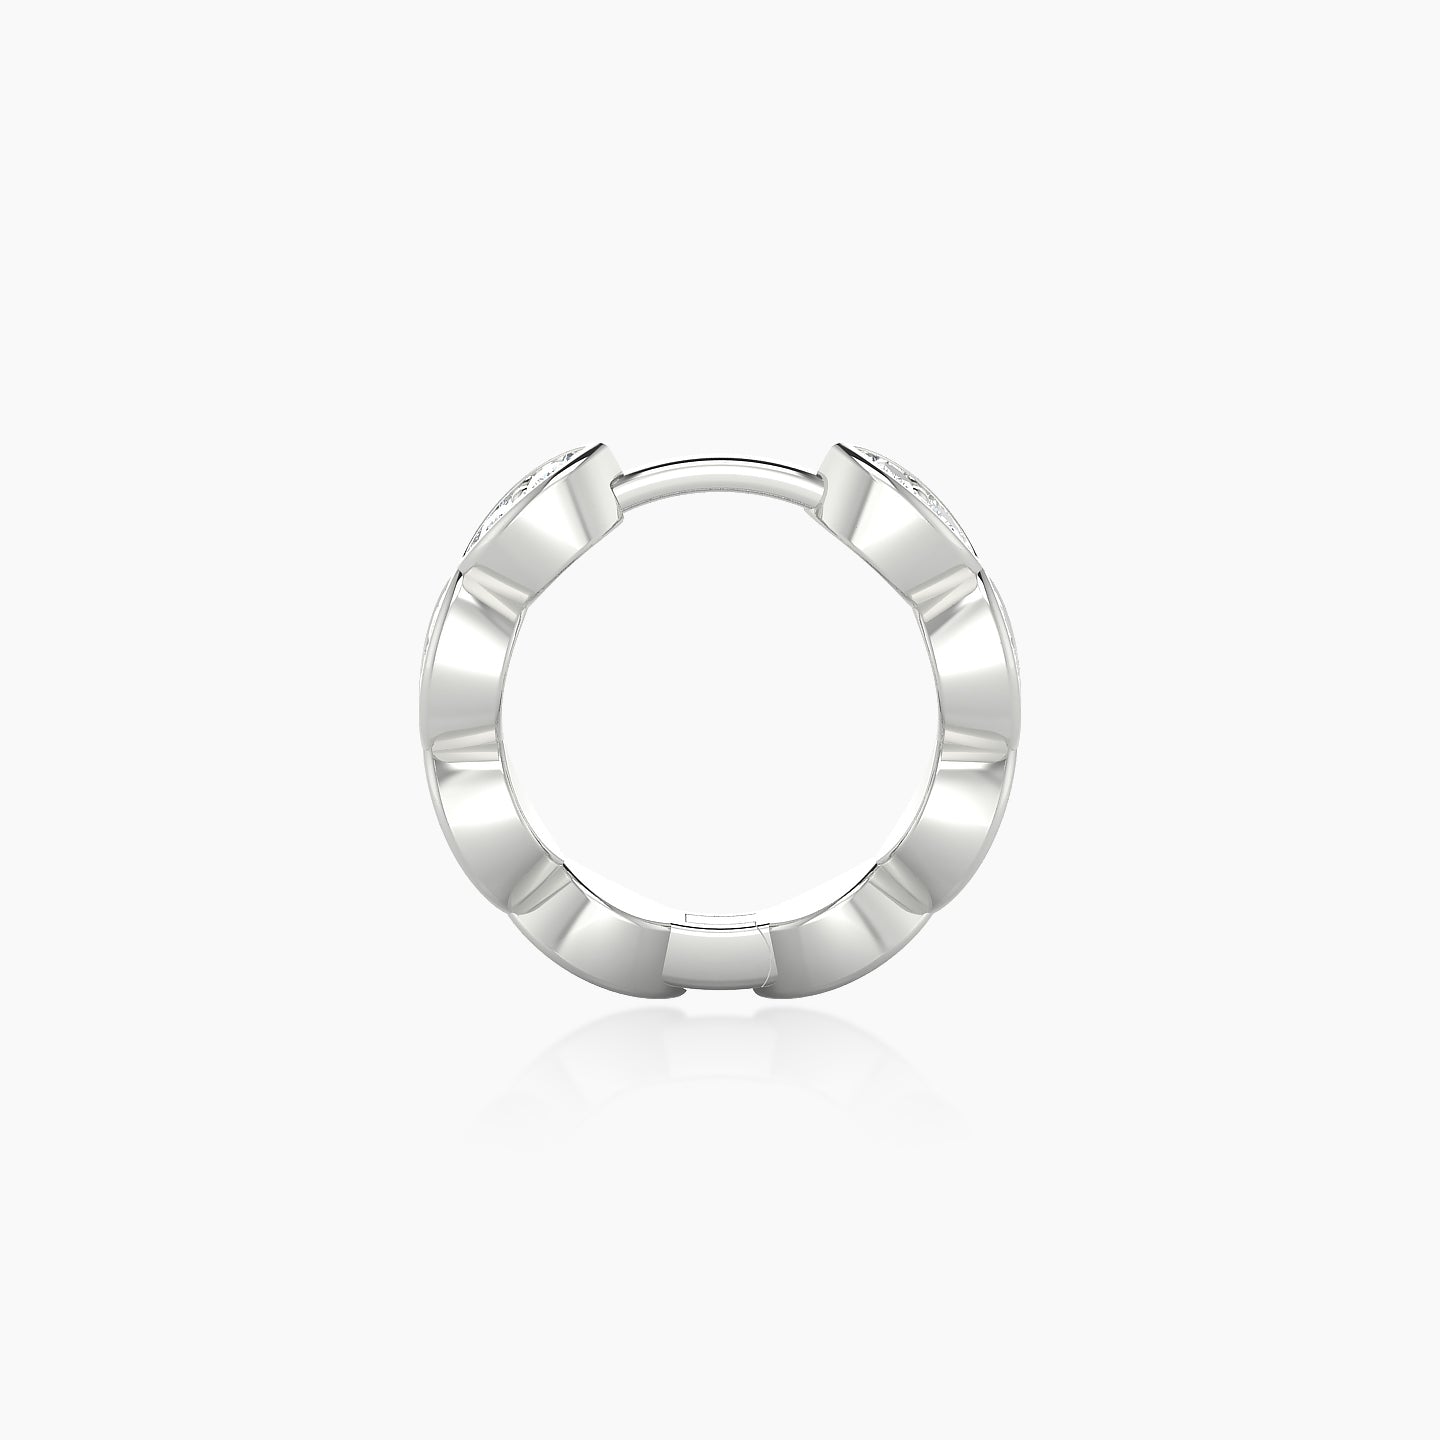 Hathor | 18k White Gold 8 mm Diamond Nose Ring Piercing